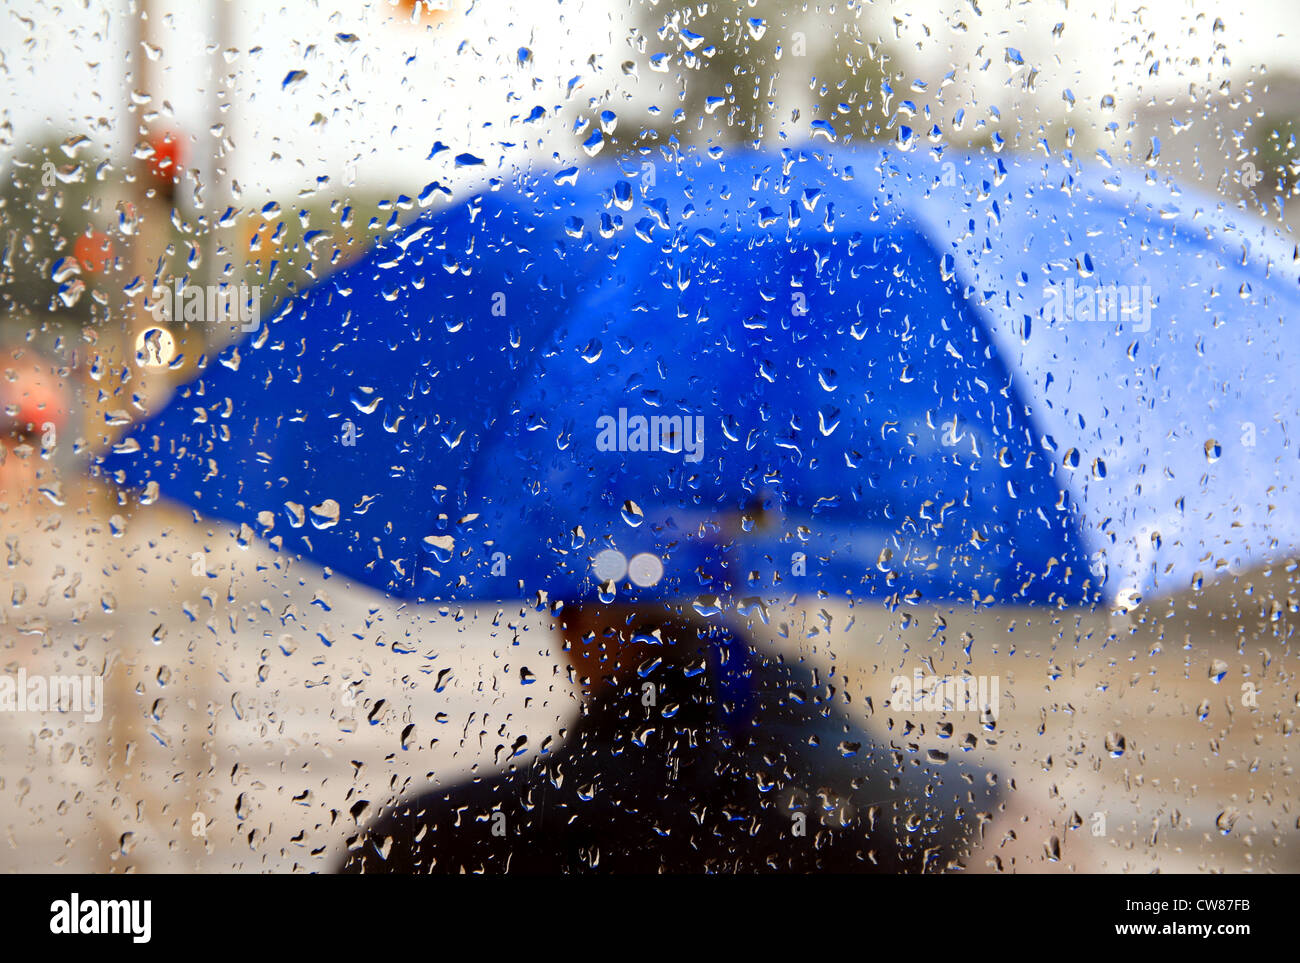 A man holding a blue umbrella during a rainy day Stock Photo - Alamy